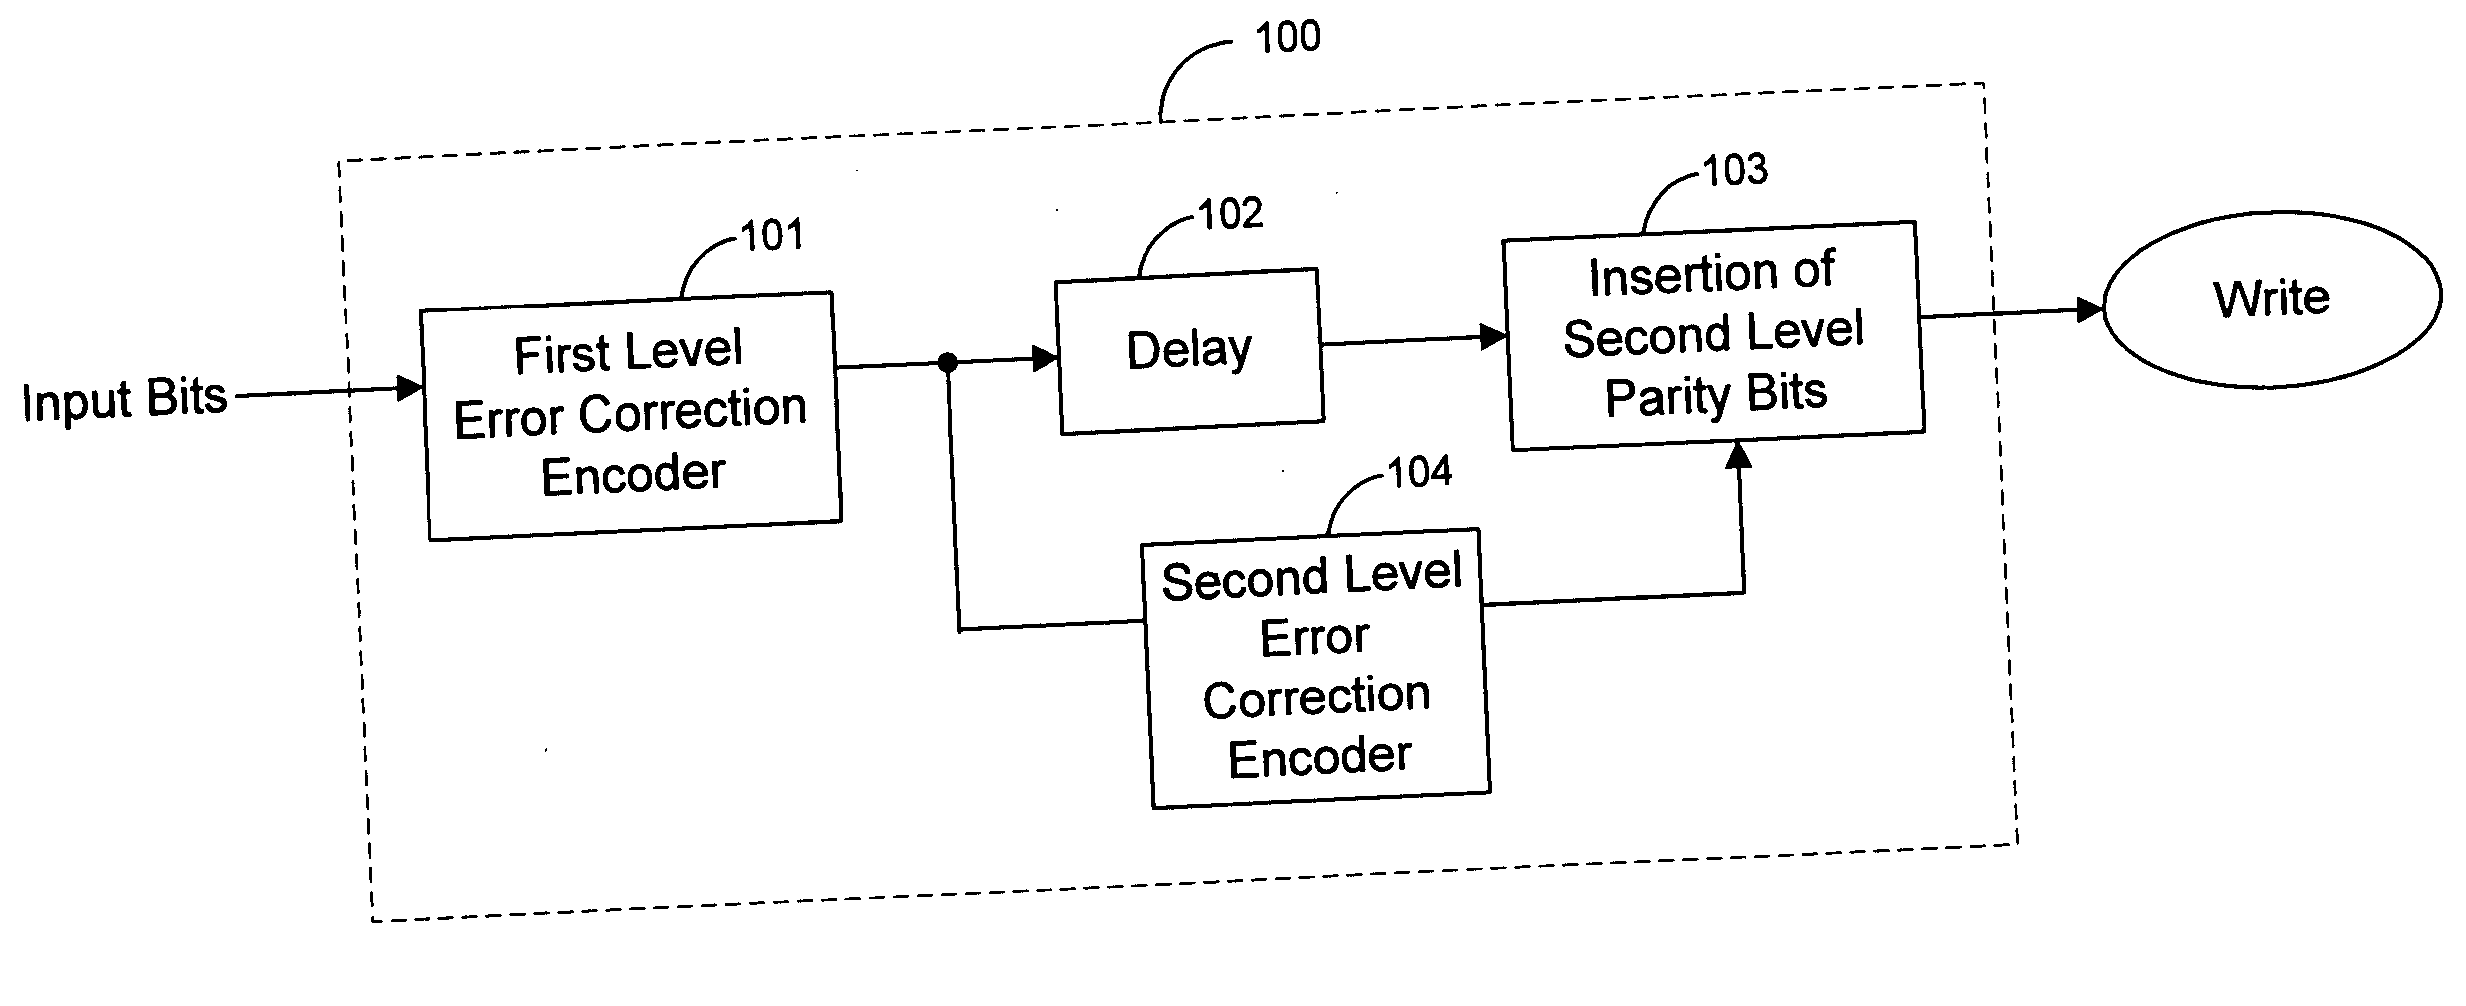 Reduced complexity error correction encoding techniques